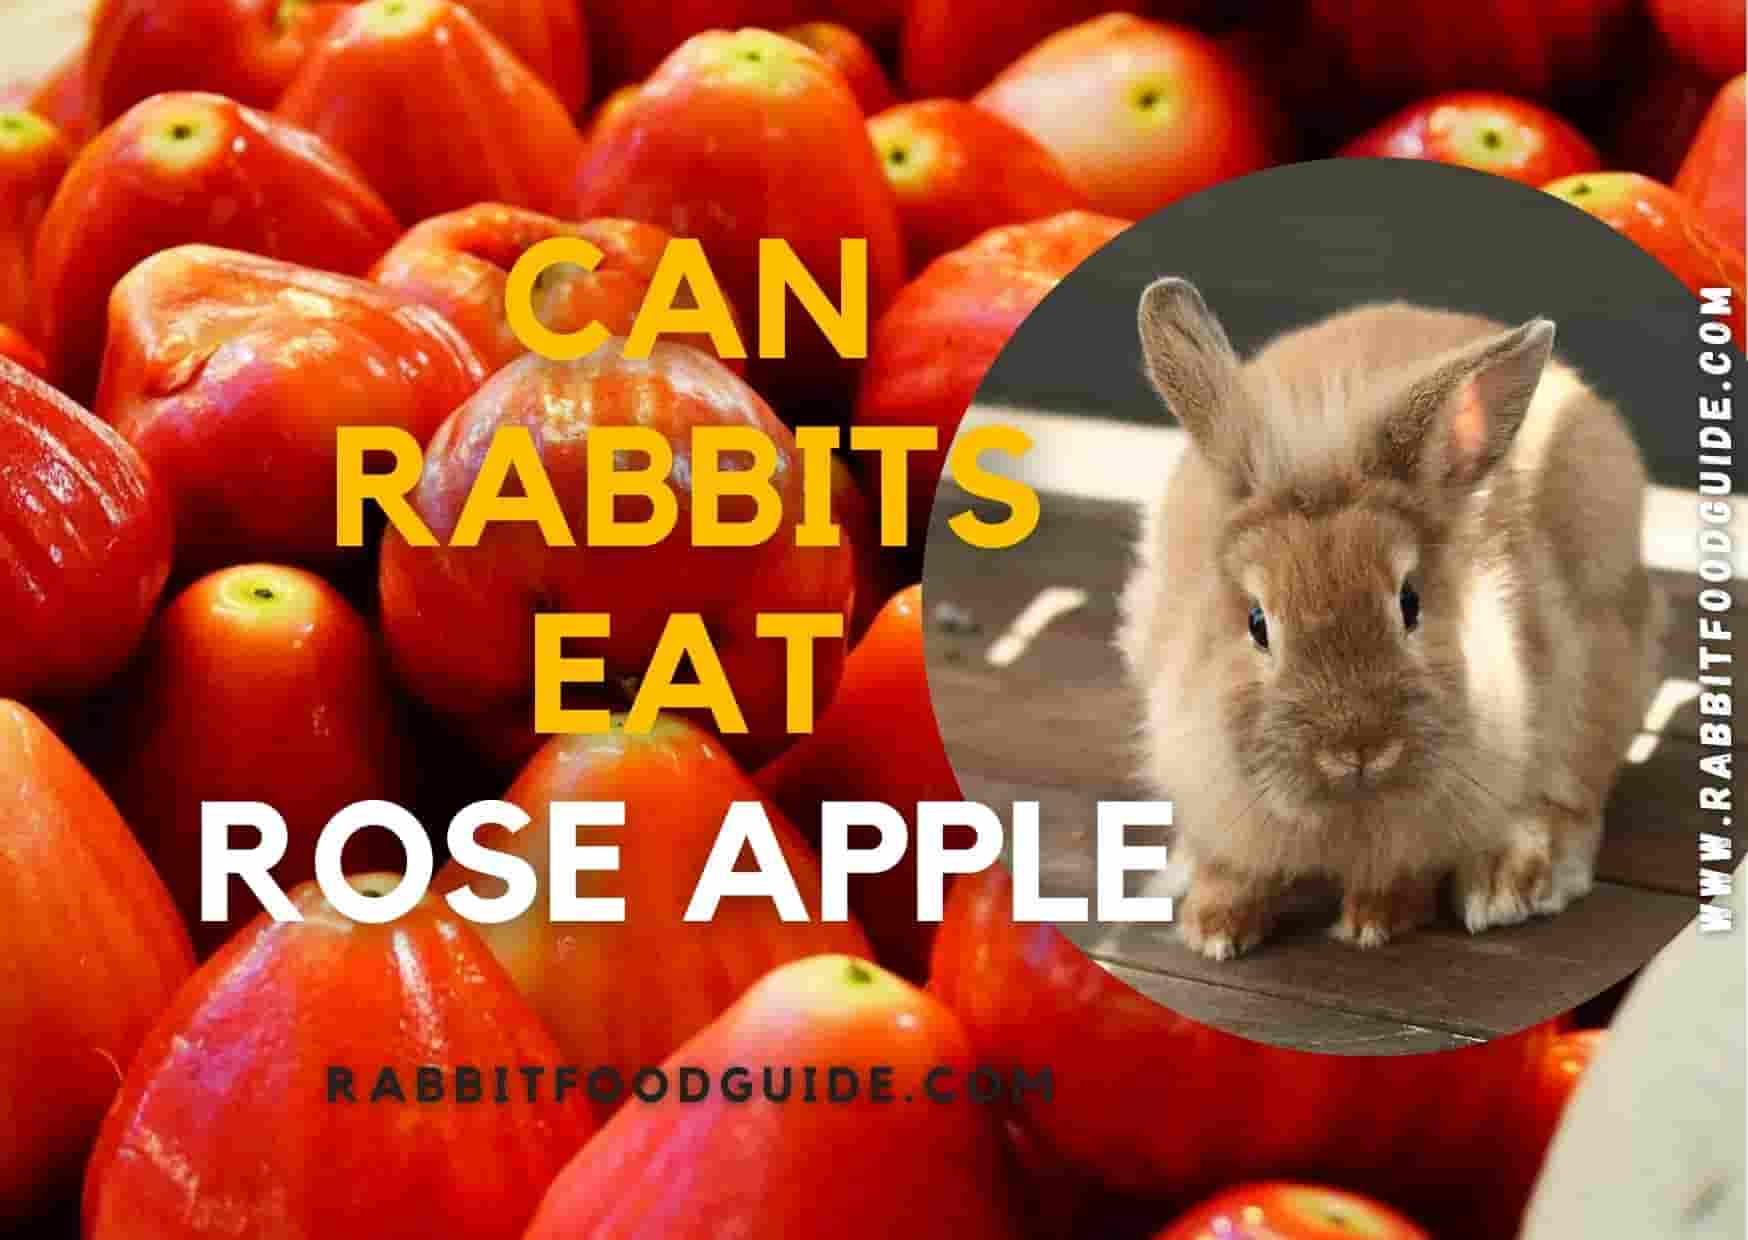 ccan rabbts eat rose apples